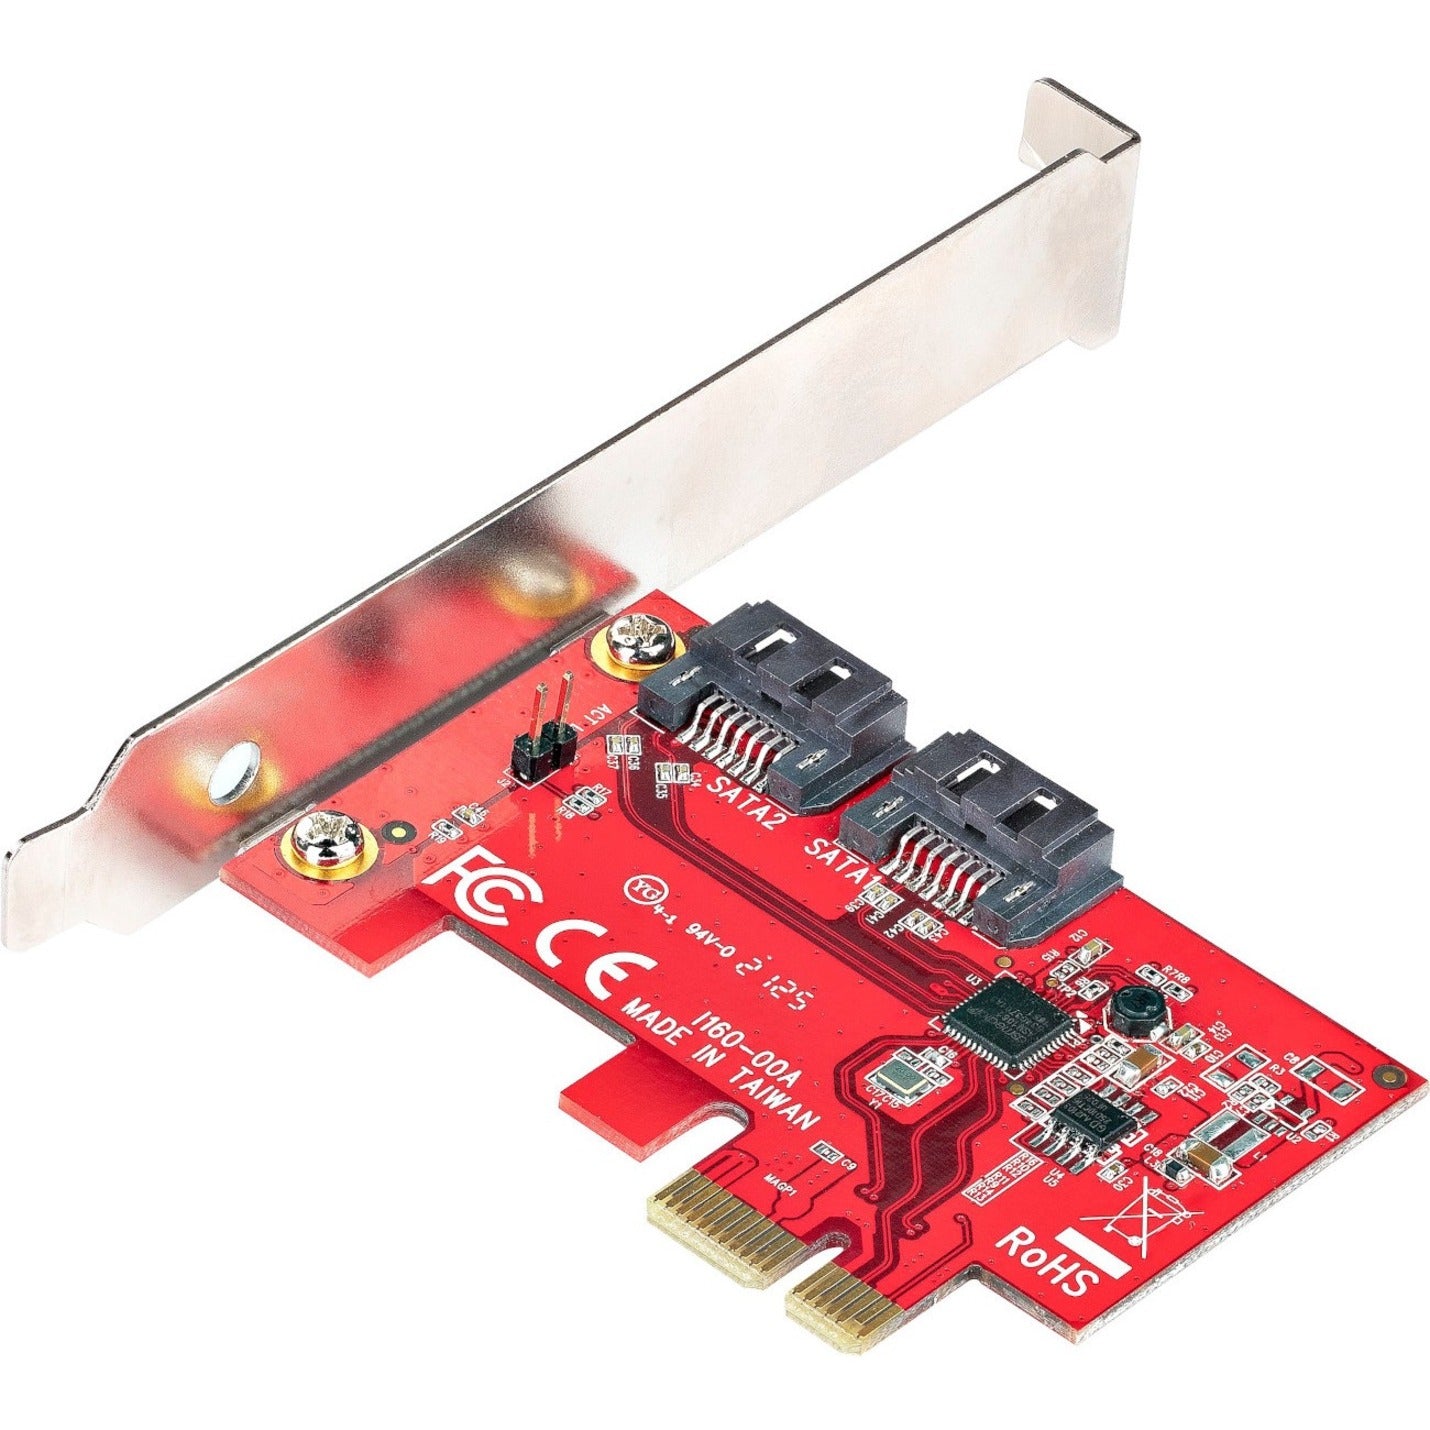 StarTech.com 2P6G-PCIE-SATA-CARD PCIe SATA Card, 2 Port PCIe SATA Expansion Card, 6Gbps SATA, PCI Express to SATA Adapter, Non-RAID, PCIe to SATA Converter